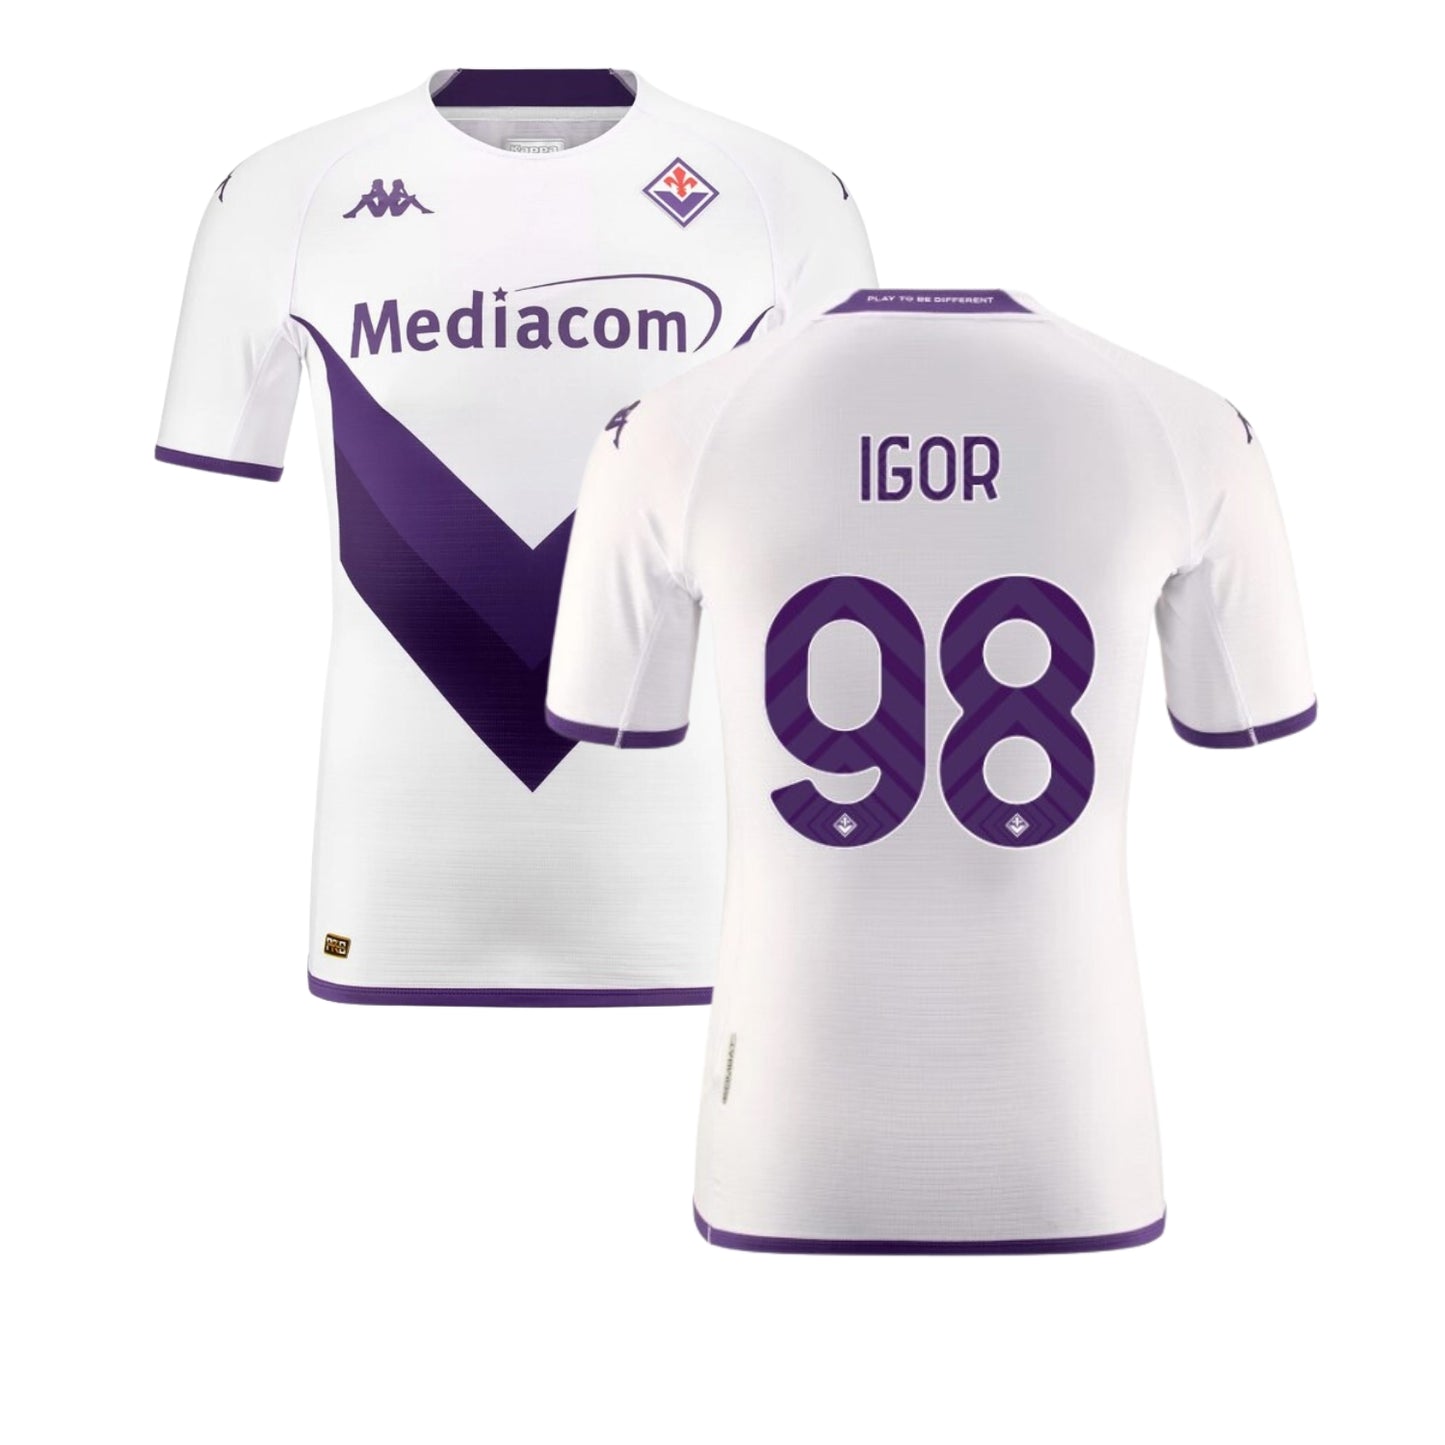 Igor ACF Fiorentina 98 Jersey